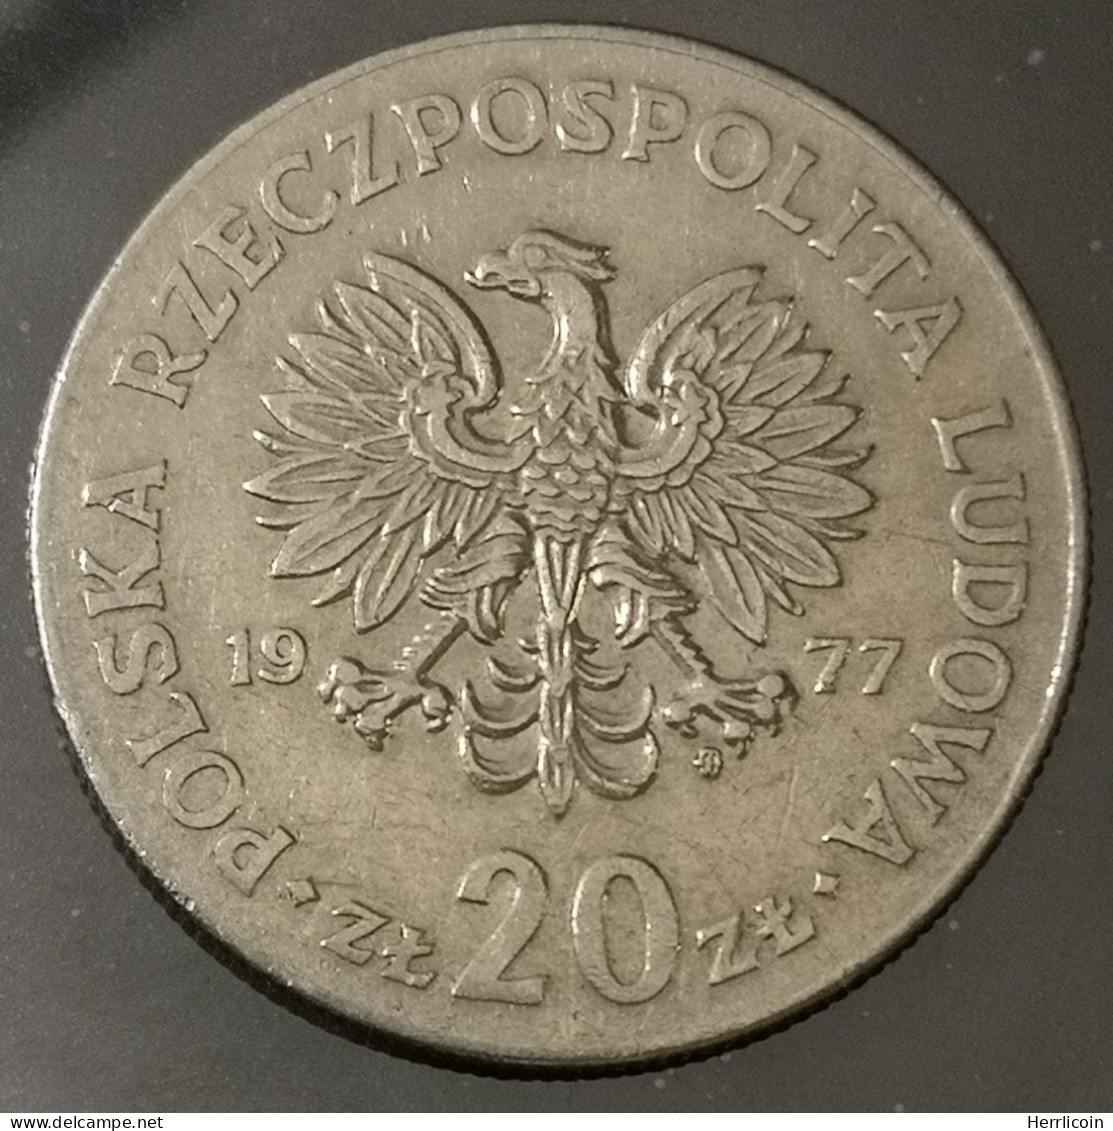 Monnaie Pologne - 1977 - 20 Zlotych Nowotko MW - Polen